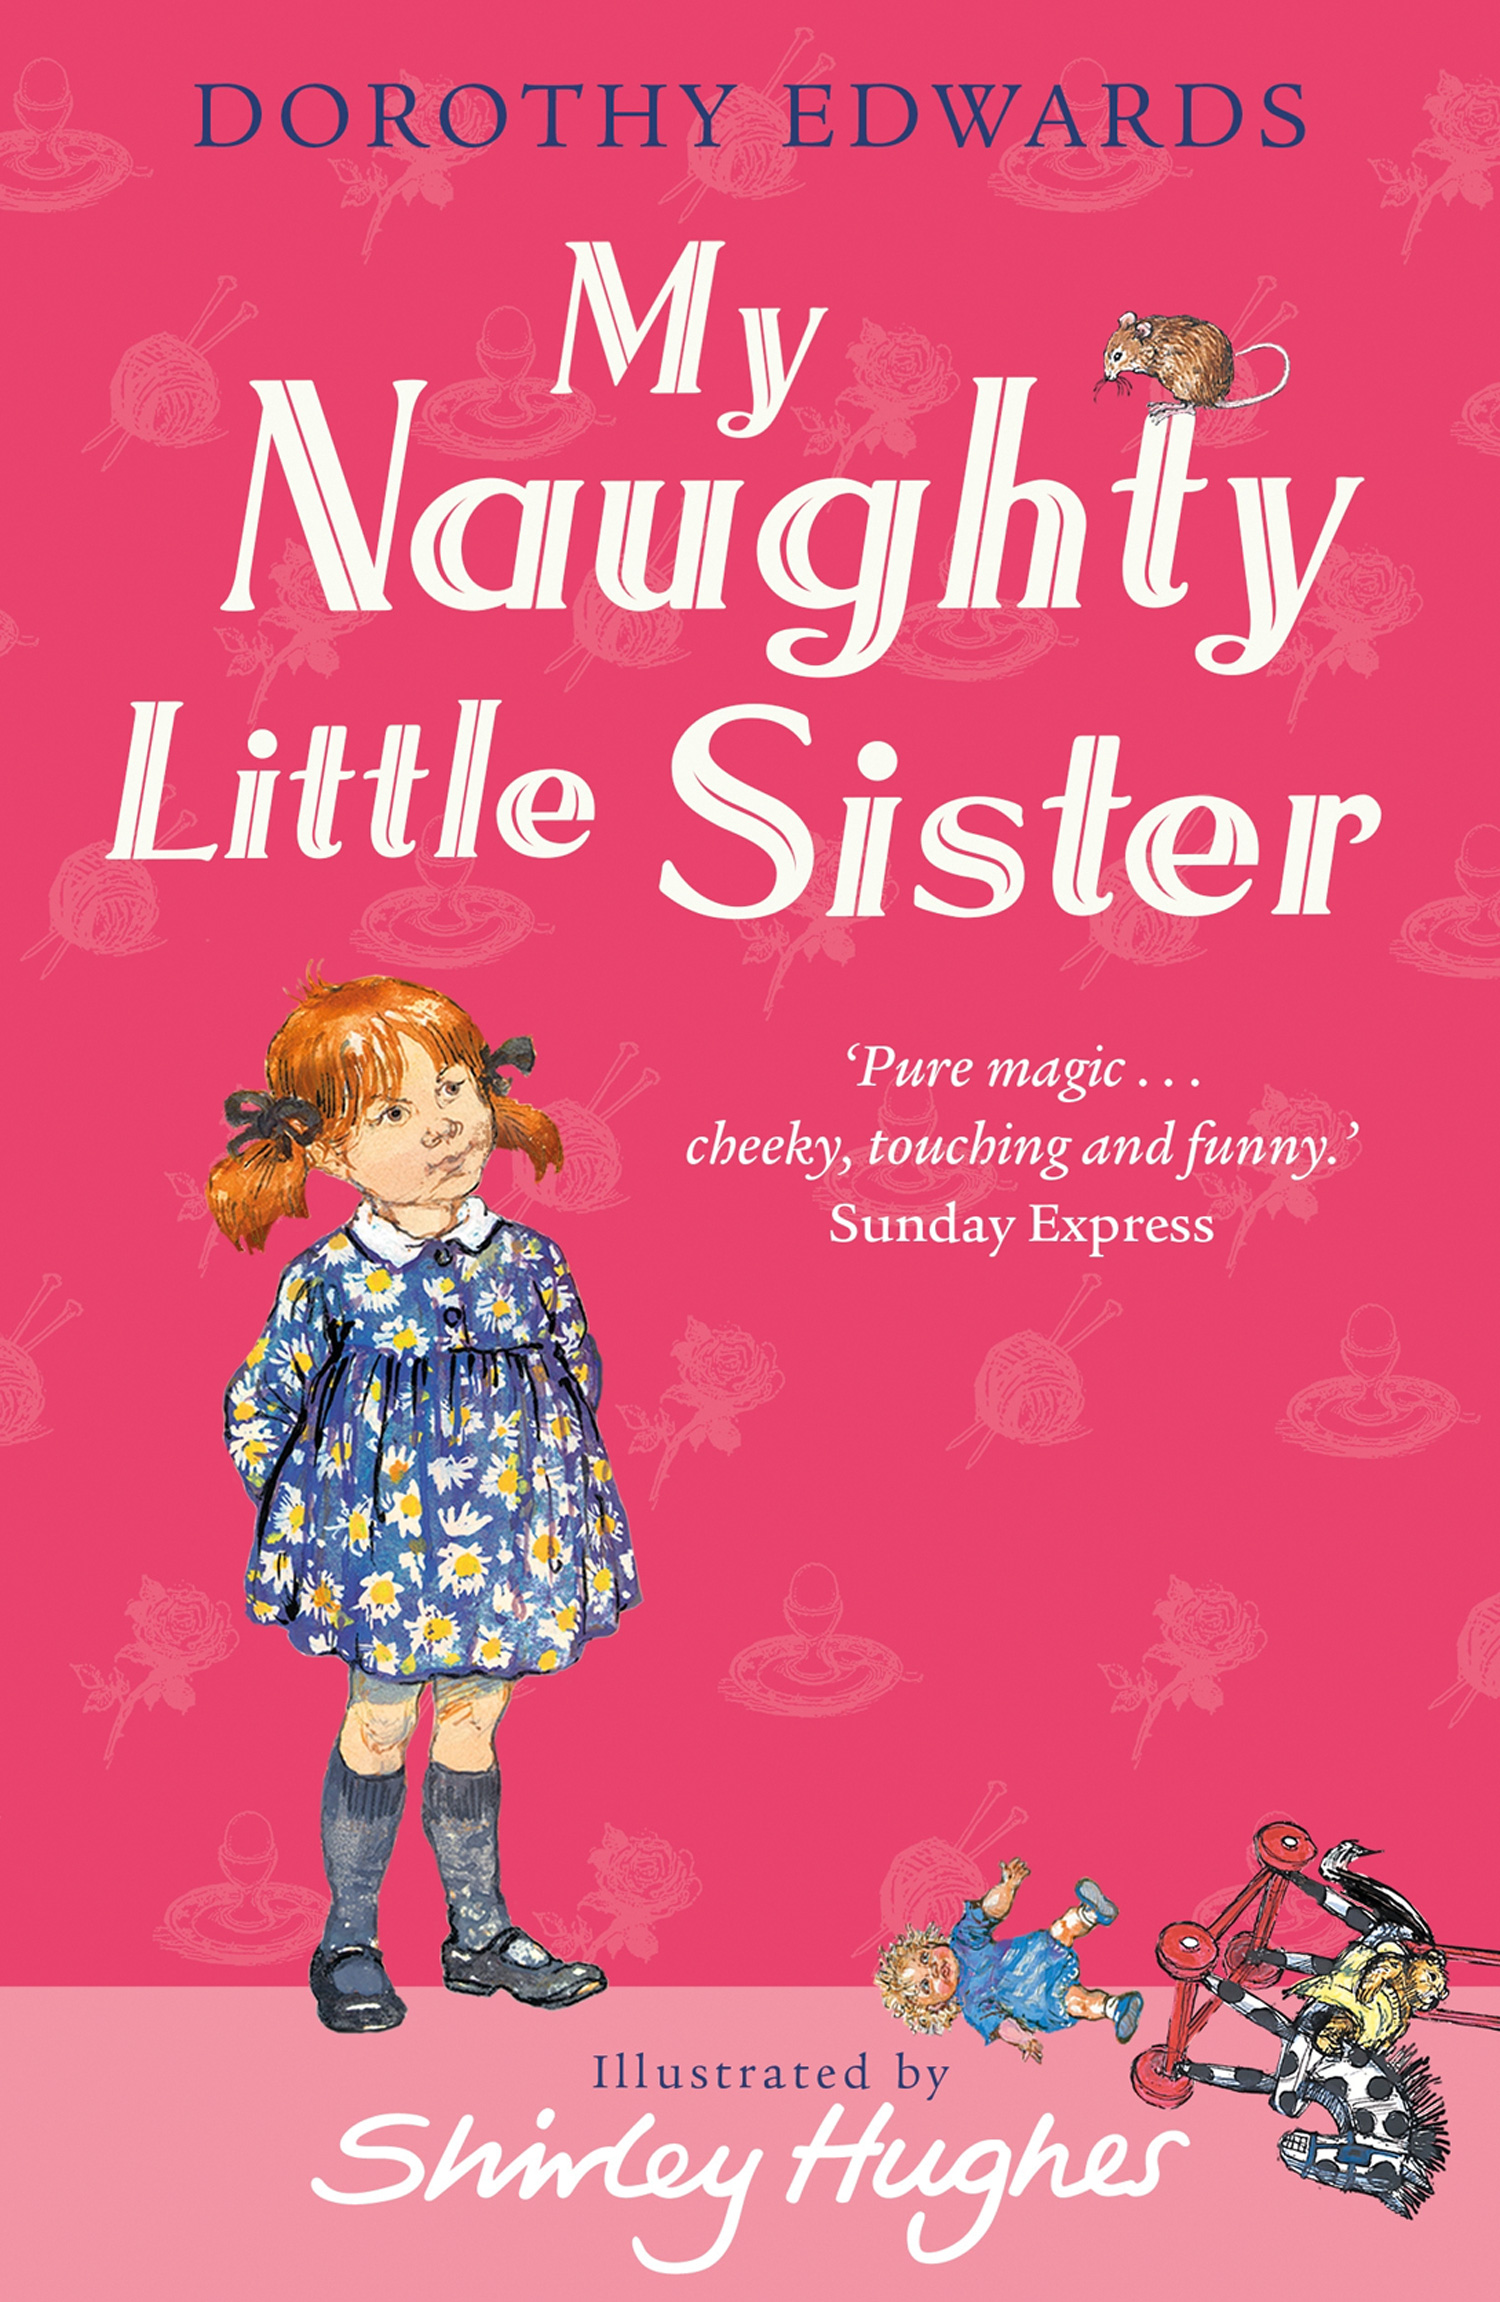 My sister to read books. Дороти Эдвардс книги. Little sister книги английские. My Naughty little sister купить книгу. Читать книгу my Naughty little sister с заданиями.